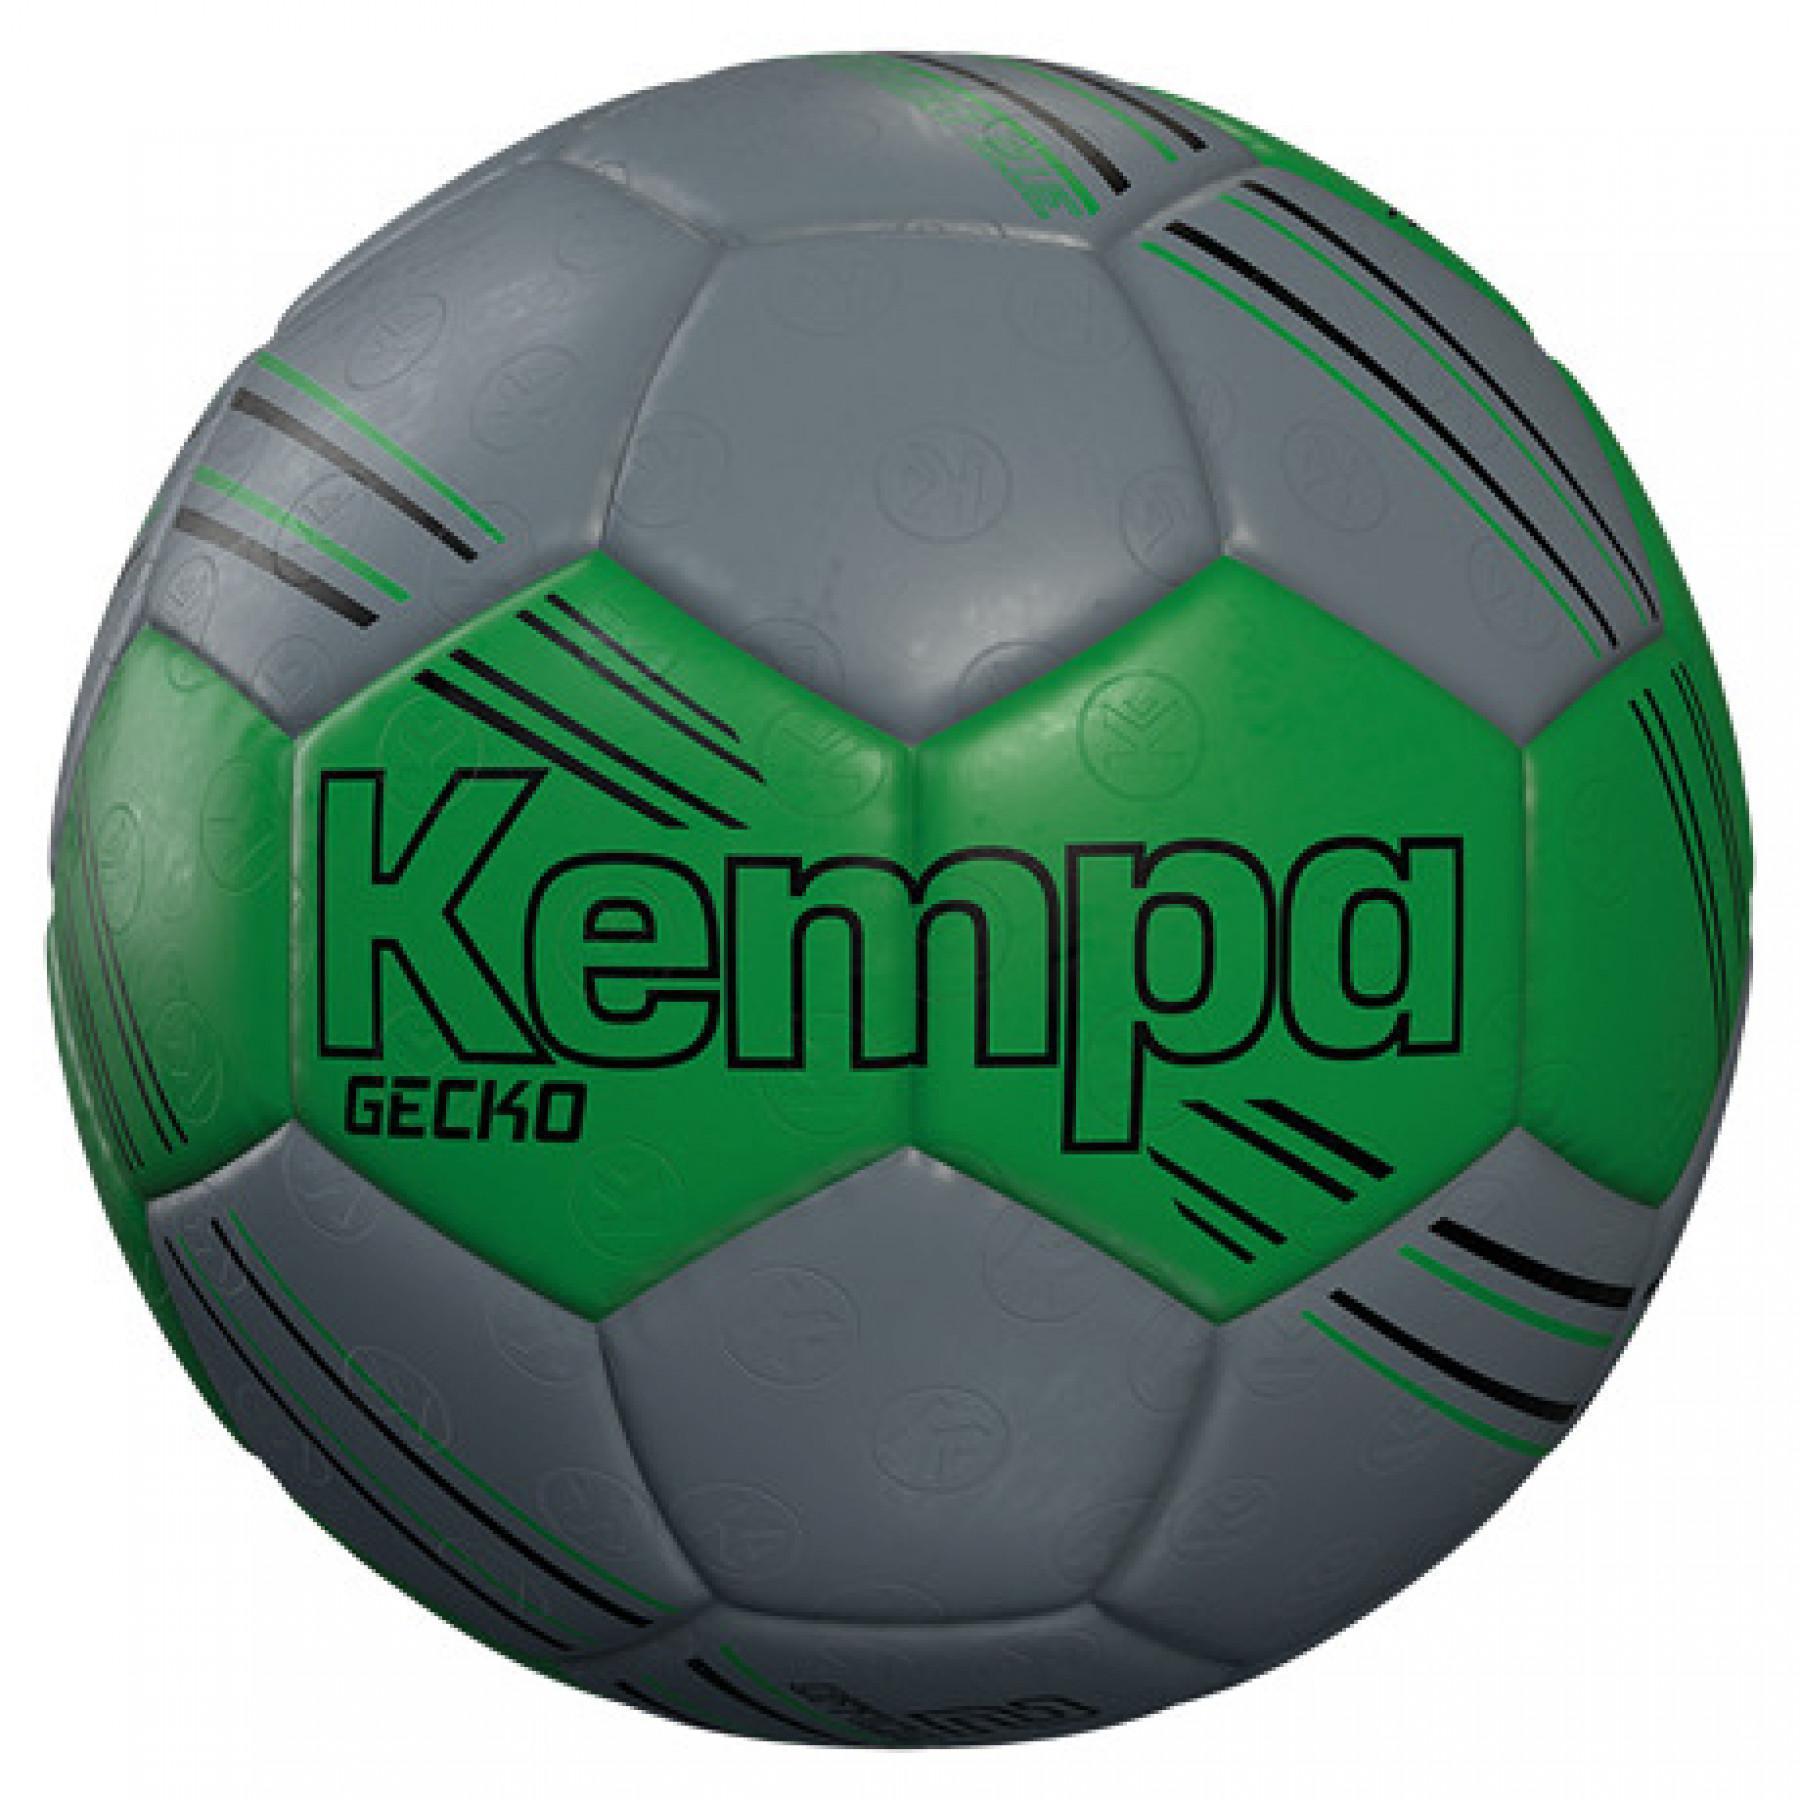 Handball Kempa Gecko